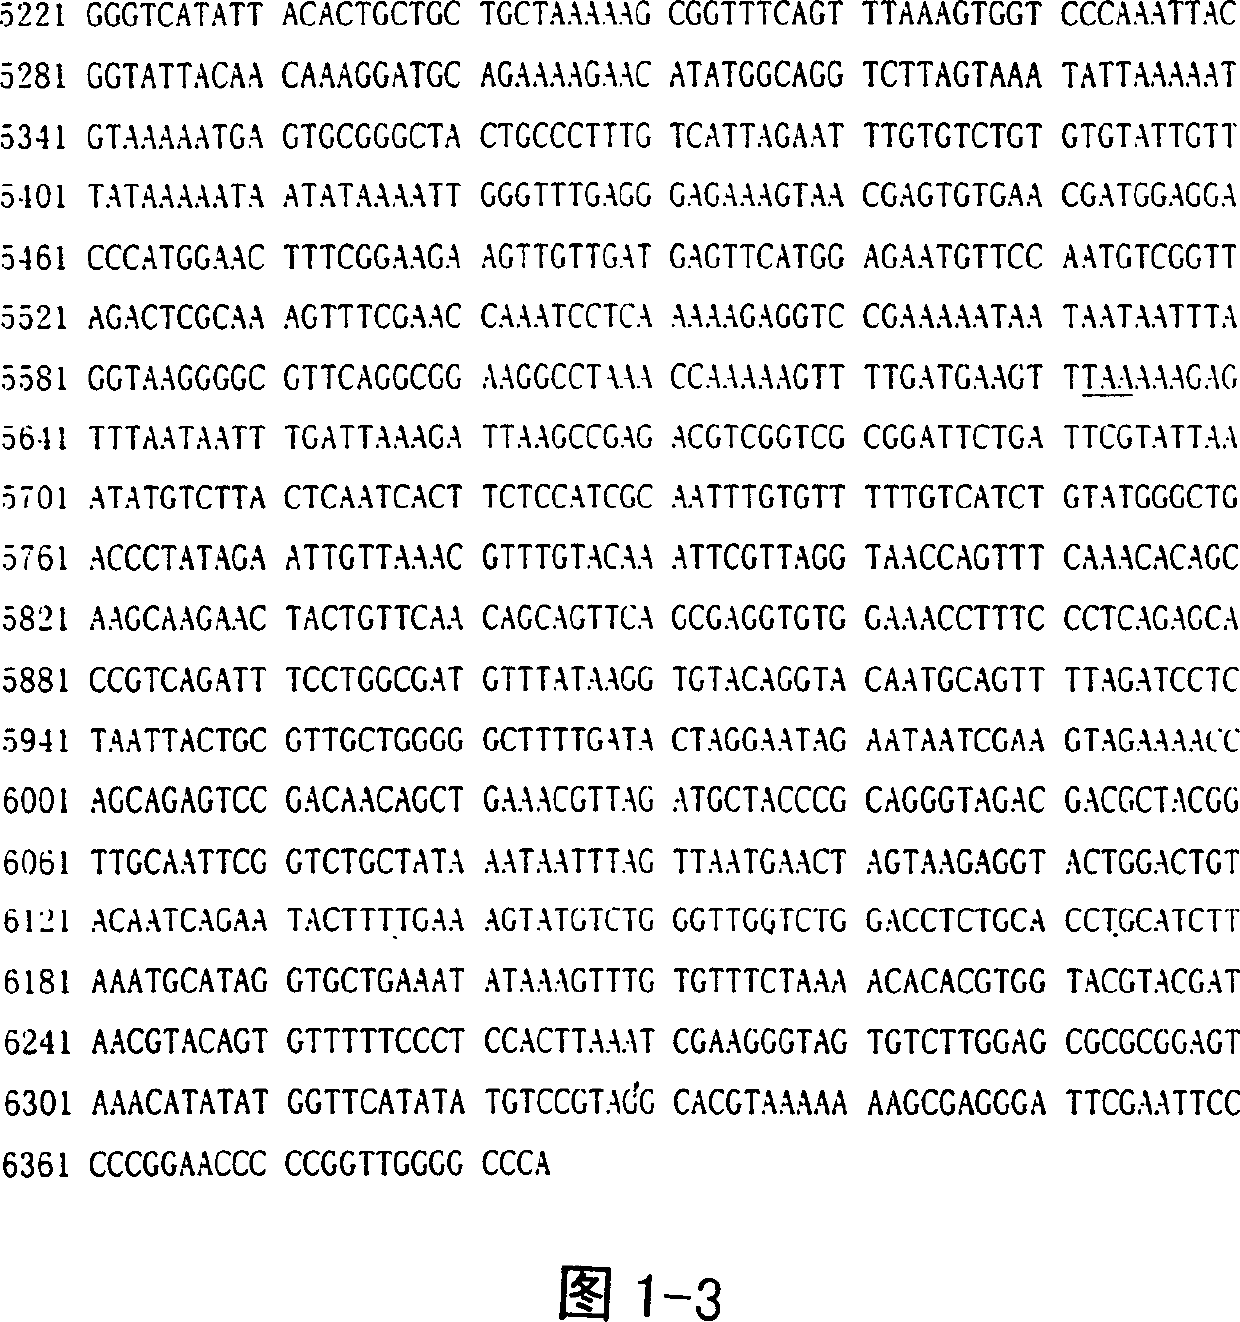 Low-virulent vaccine K genom sequence of tomato mosaic